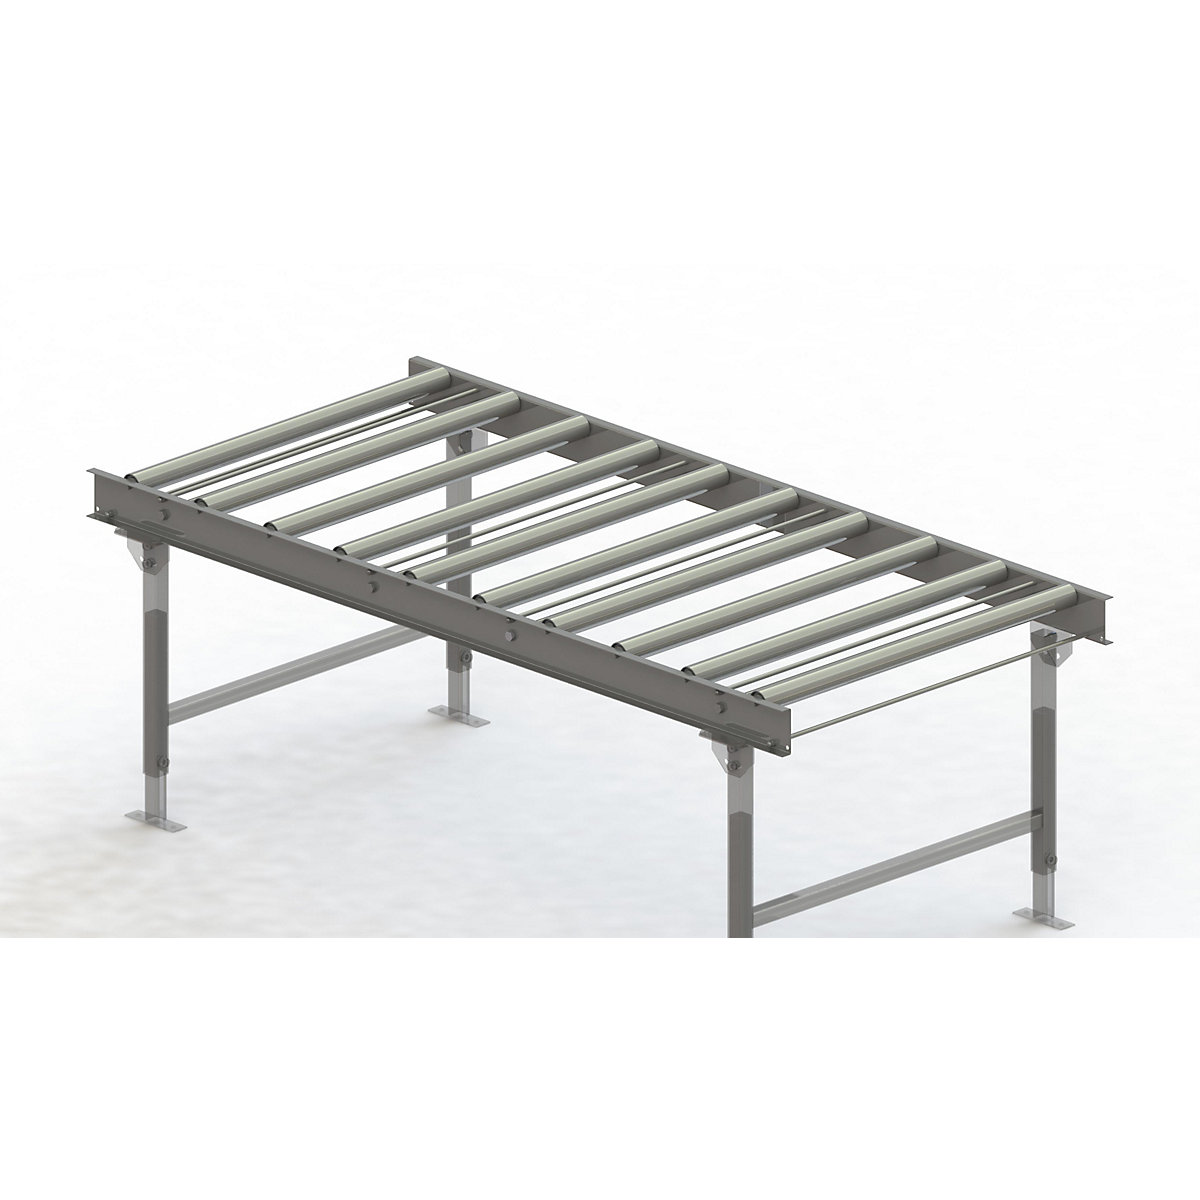 Gura – Roller conveyor, steel frame with zinc plated steel rollers, track width 900 mm, distance between axles 200 mm, length 2 m